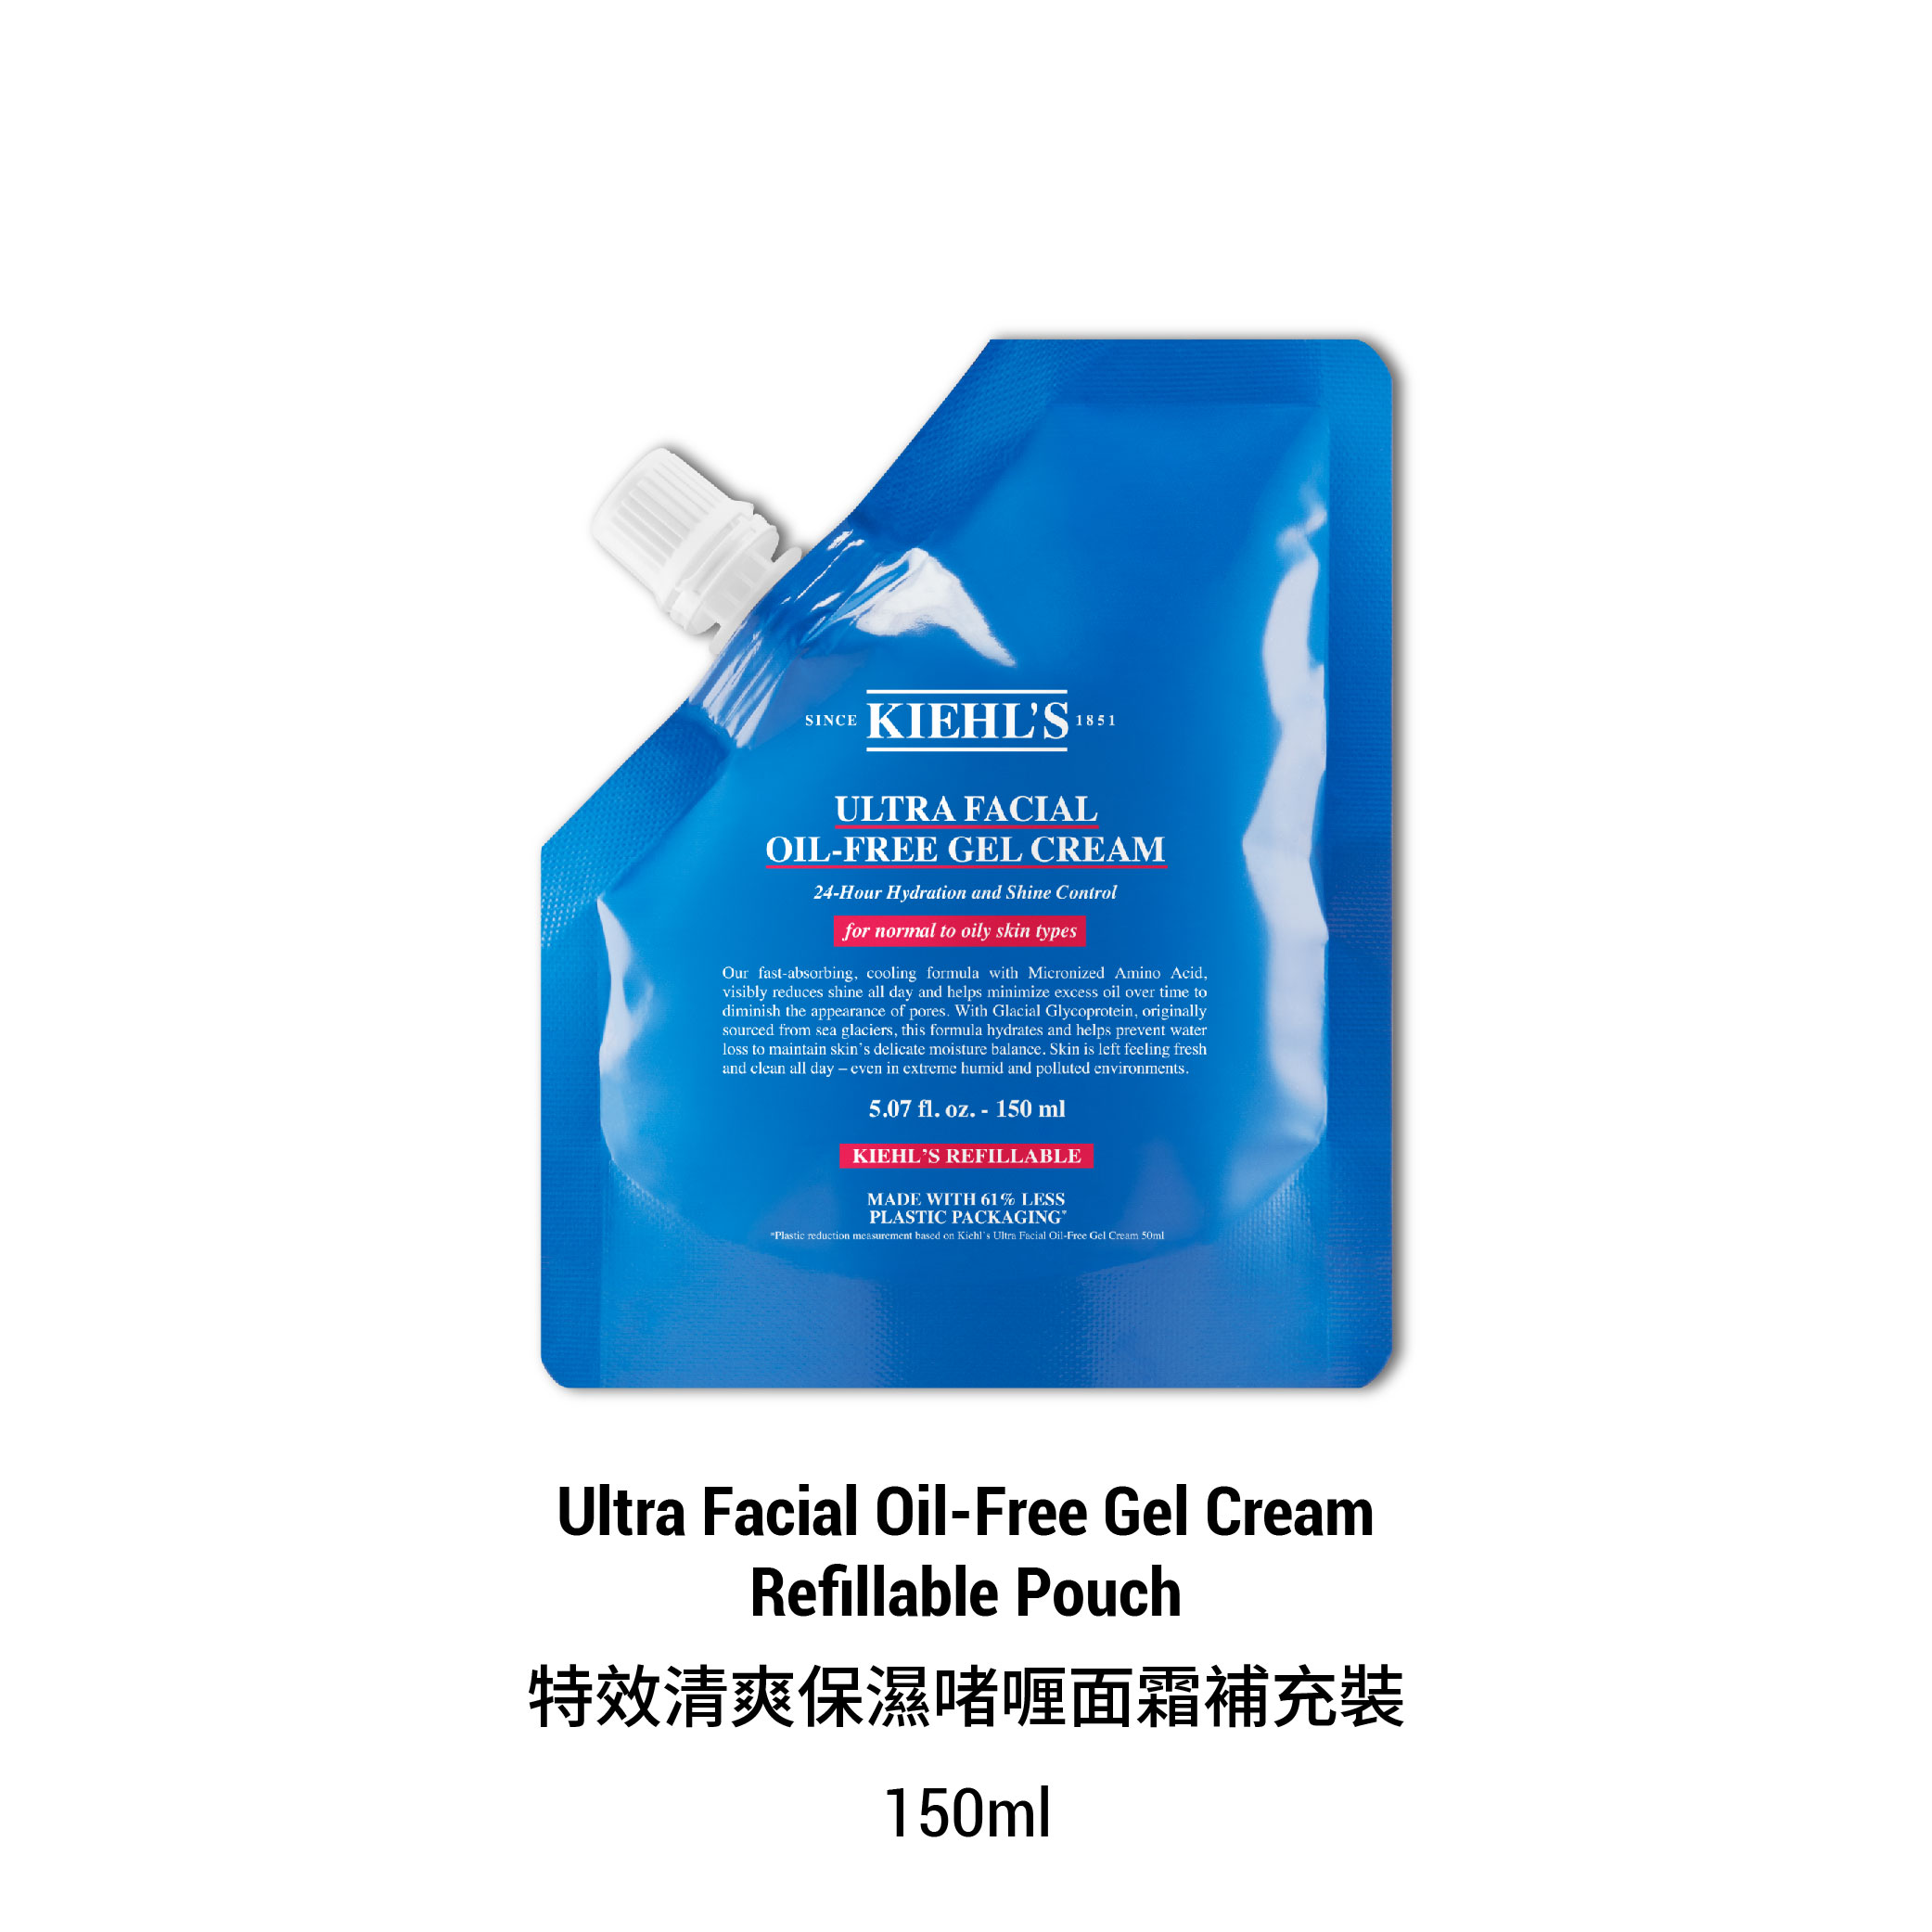 Ultra Facial Oil-Free Gel Cream Refill Set